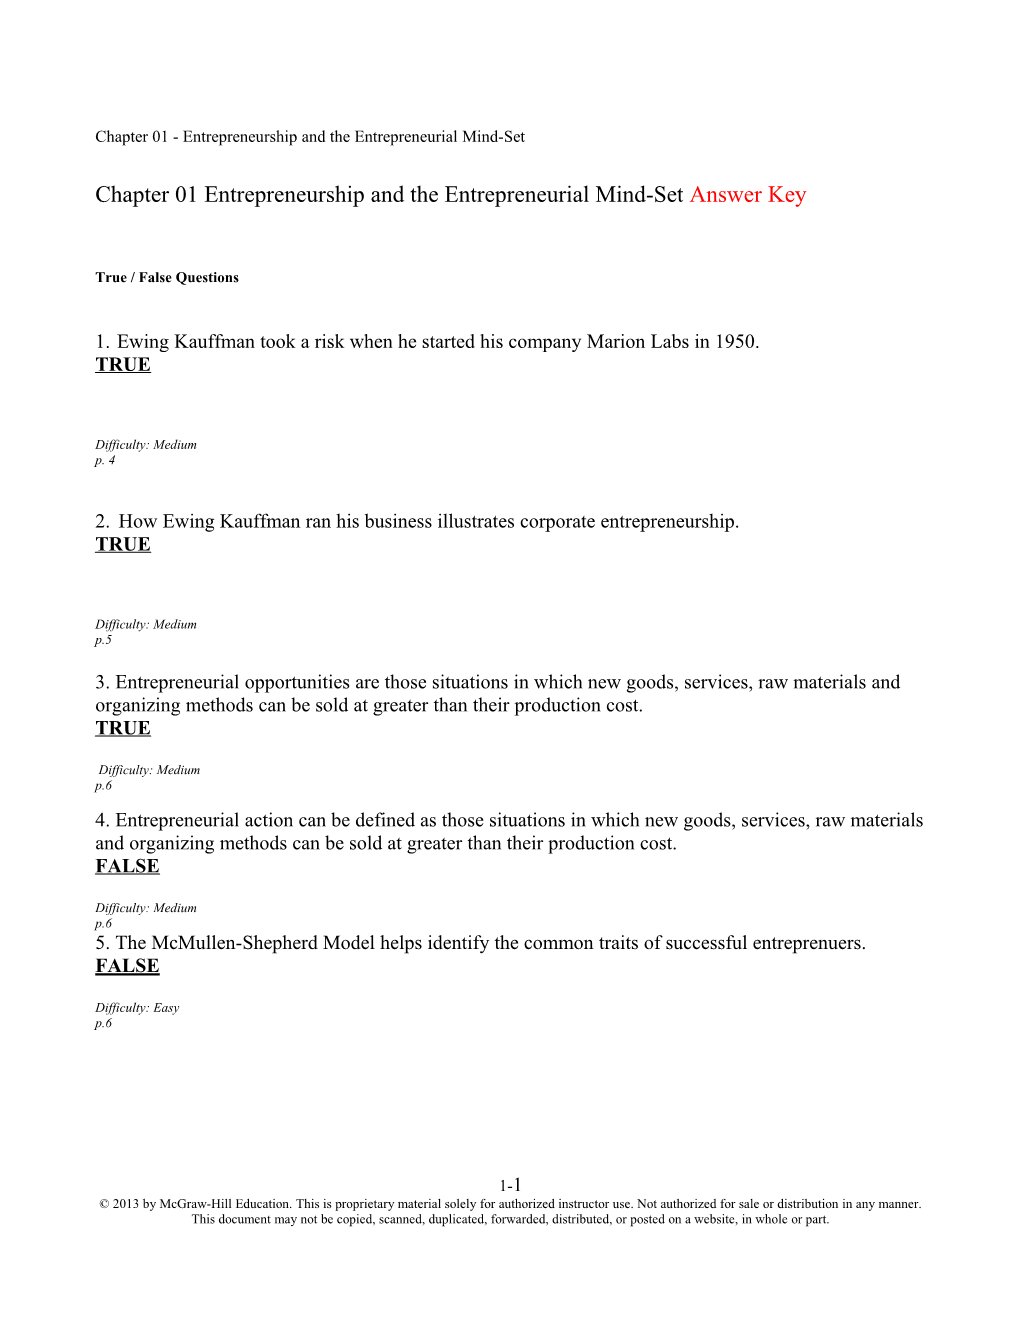 Chapter 01 Entrepreneurship and the Entrepreneurial Mind-Set